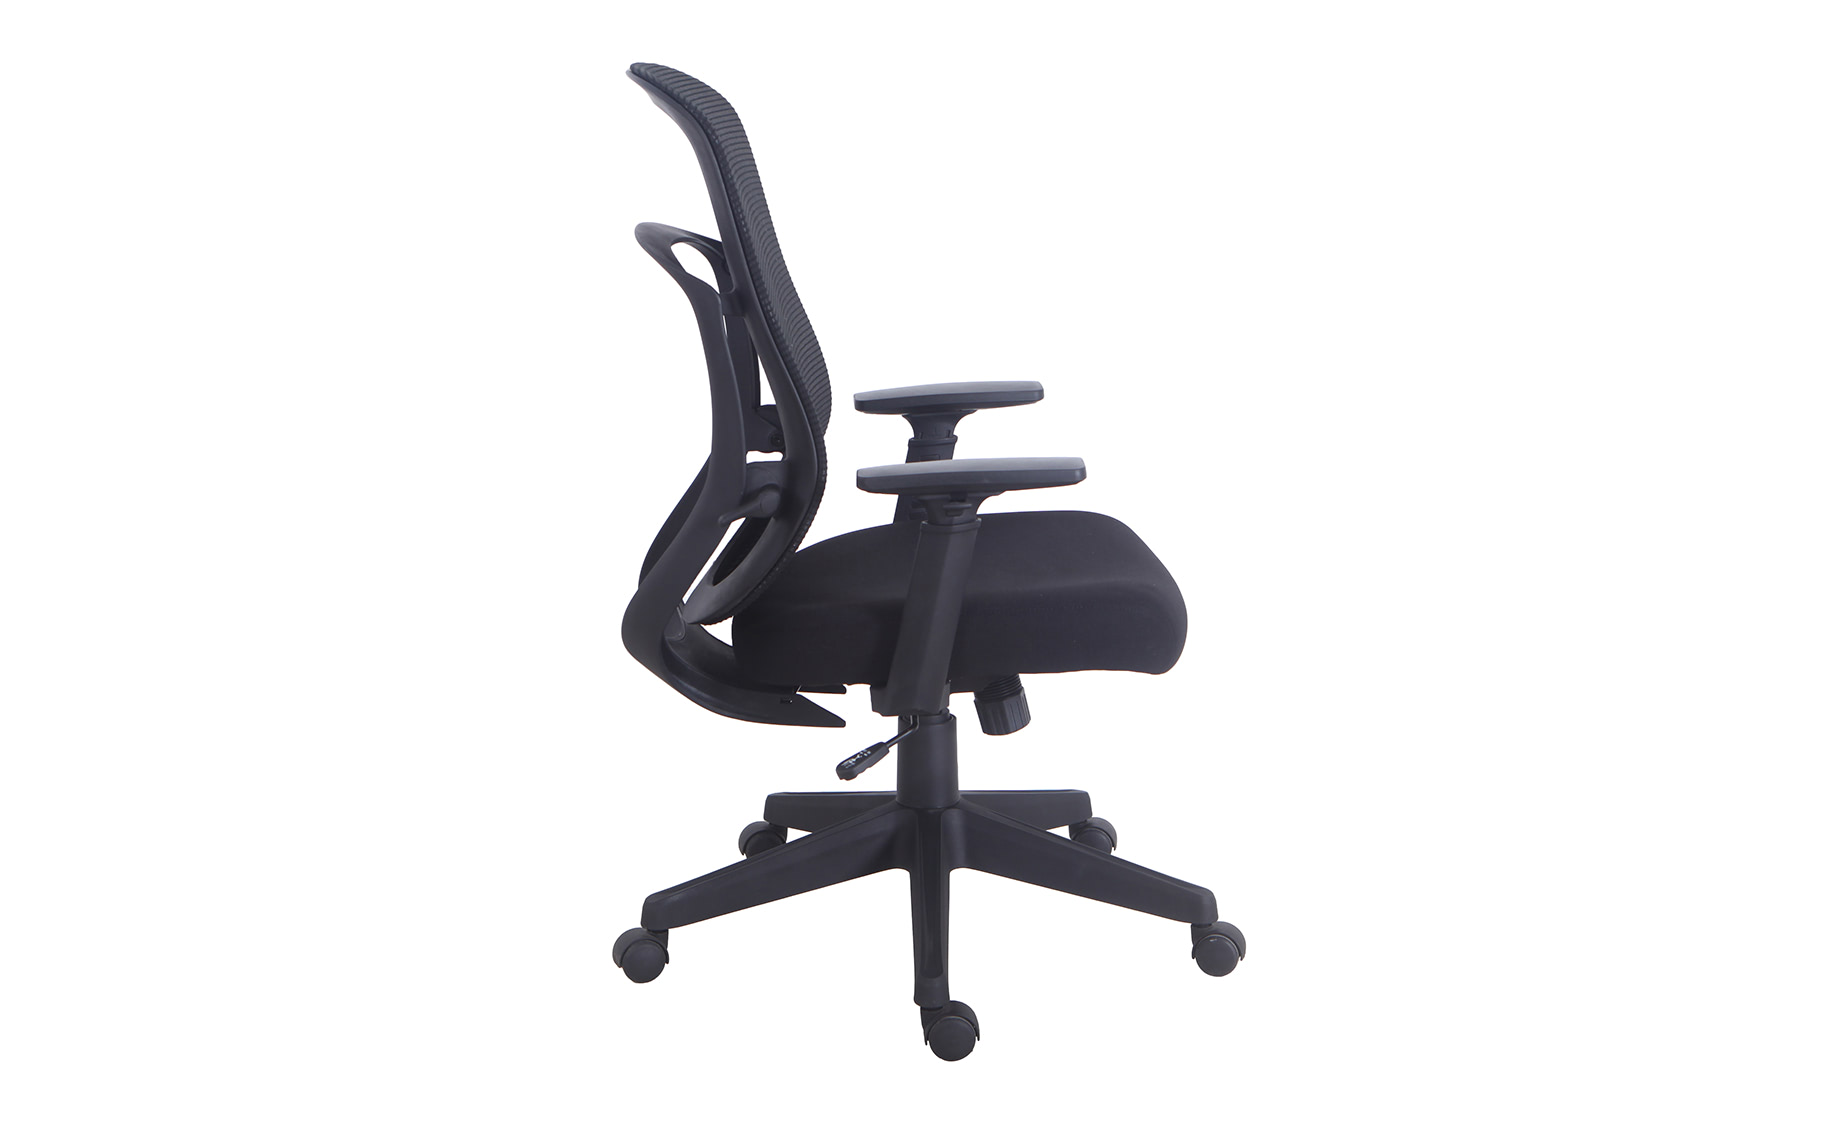 Dax kancelarijska stolica 64x64x113cm